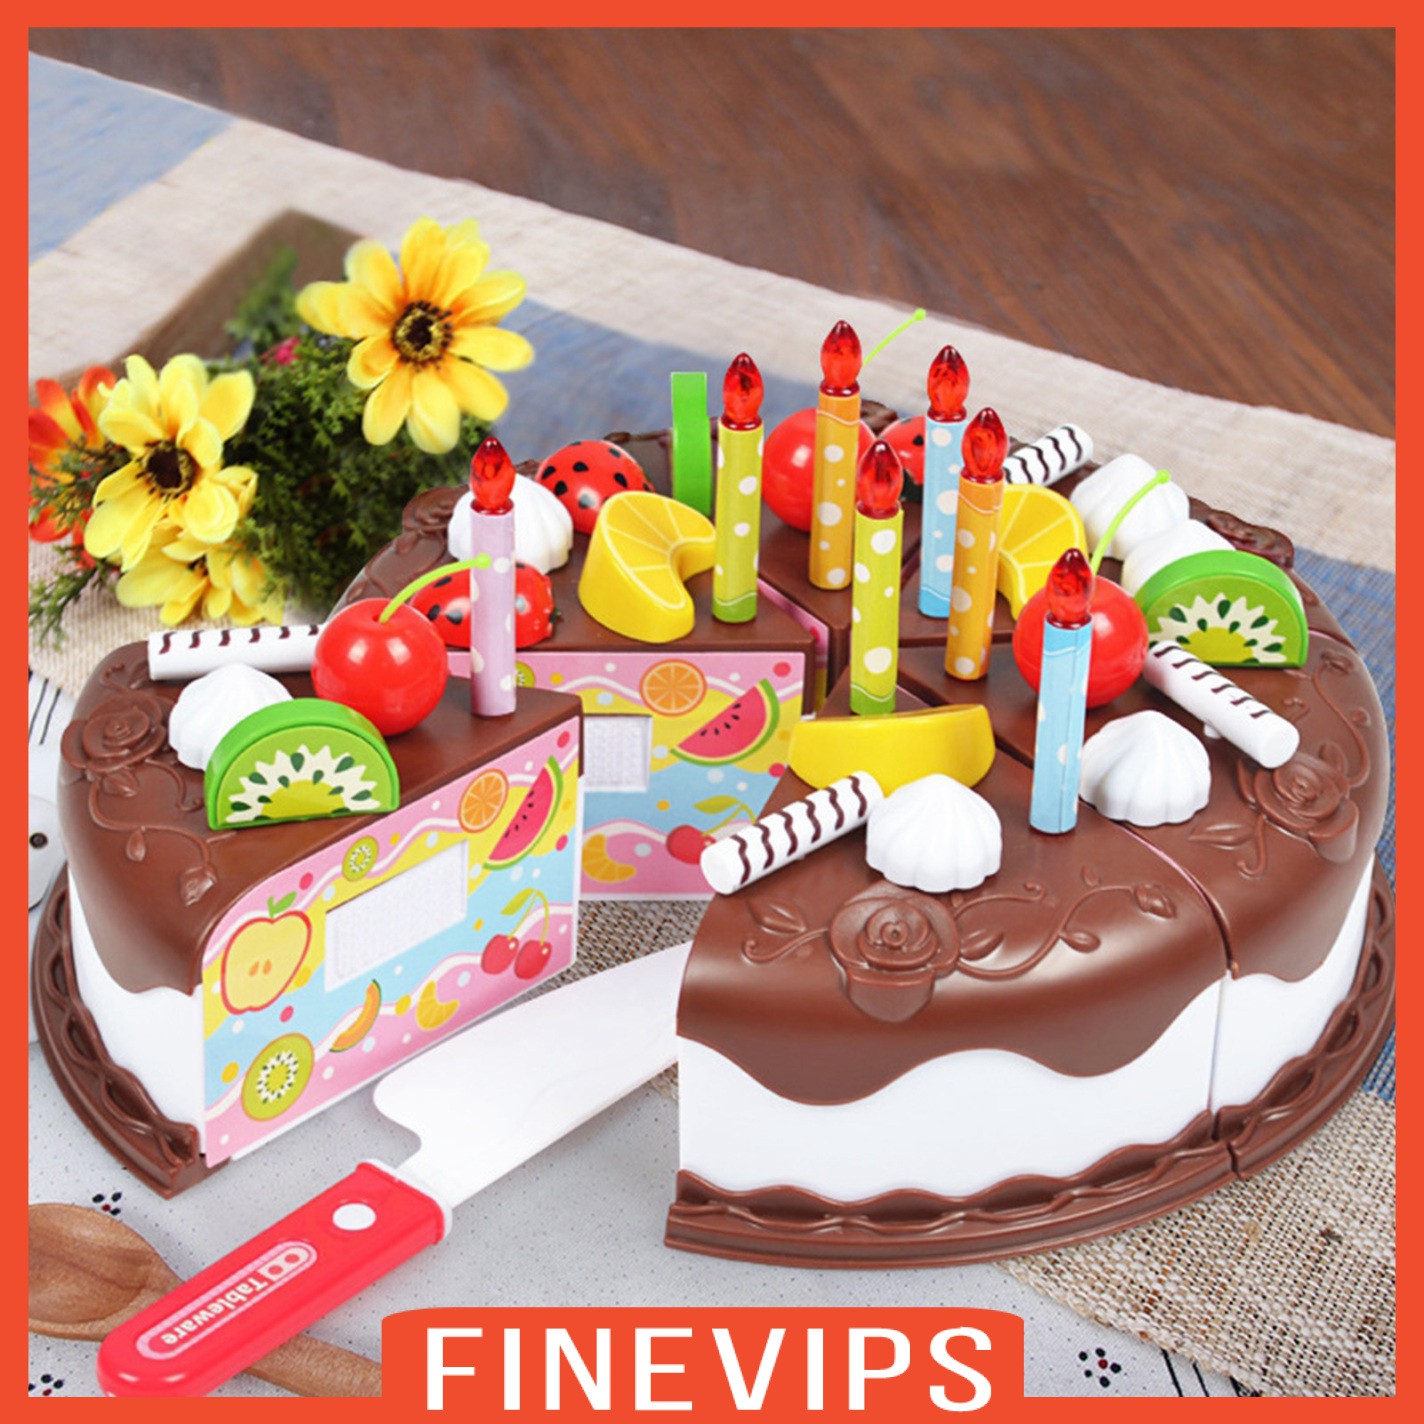 [FINEVIPS] 37 Pcs DIY Birthday Fruit Cake Set Kids Pretend Play Food Toy Kitchen Shop Gifts